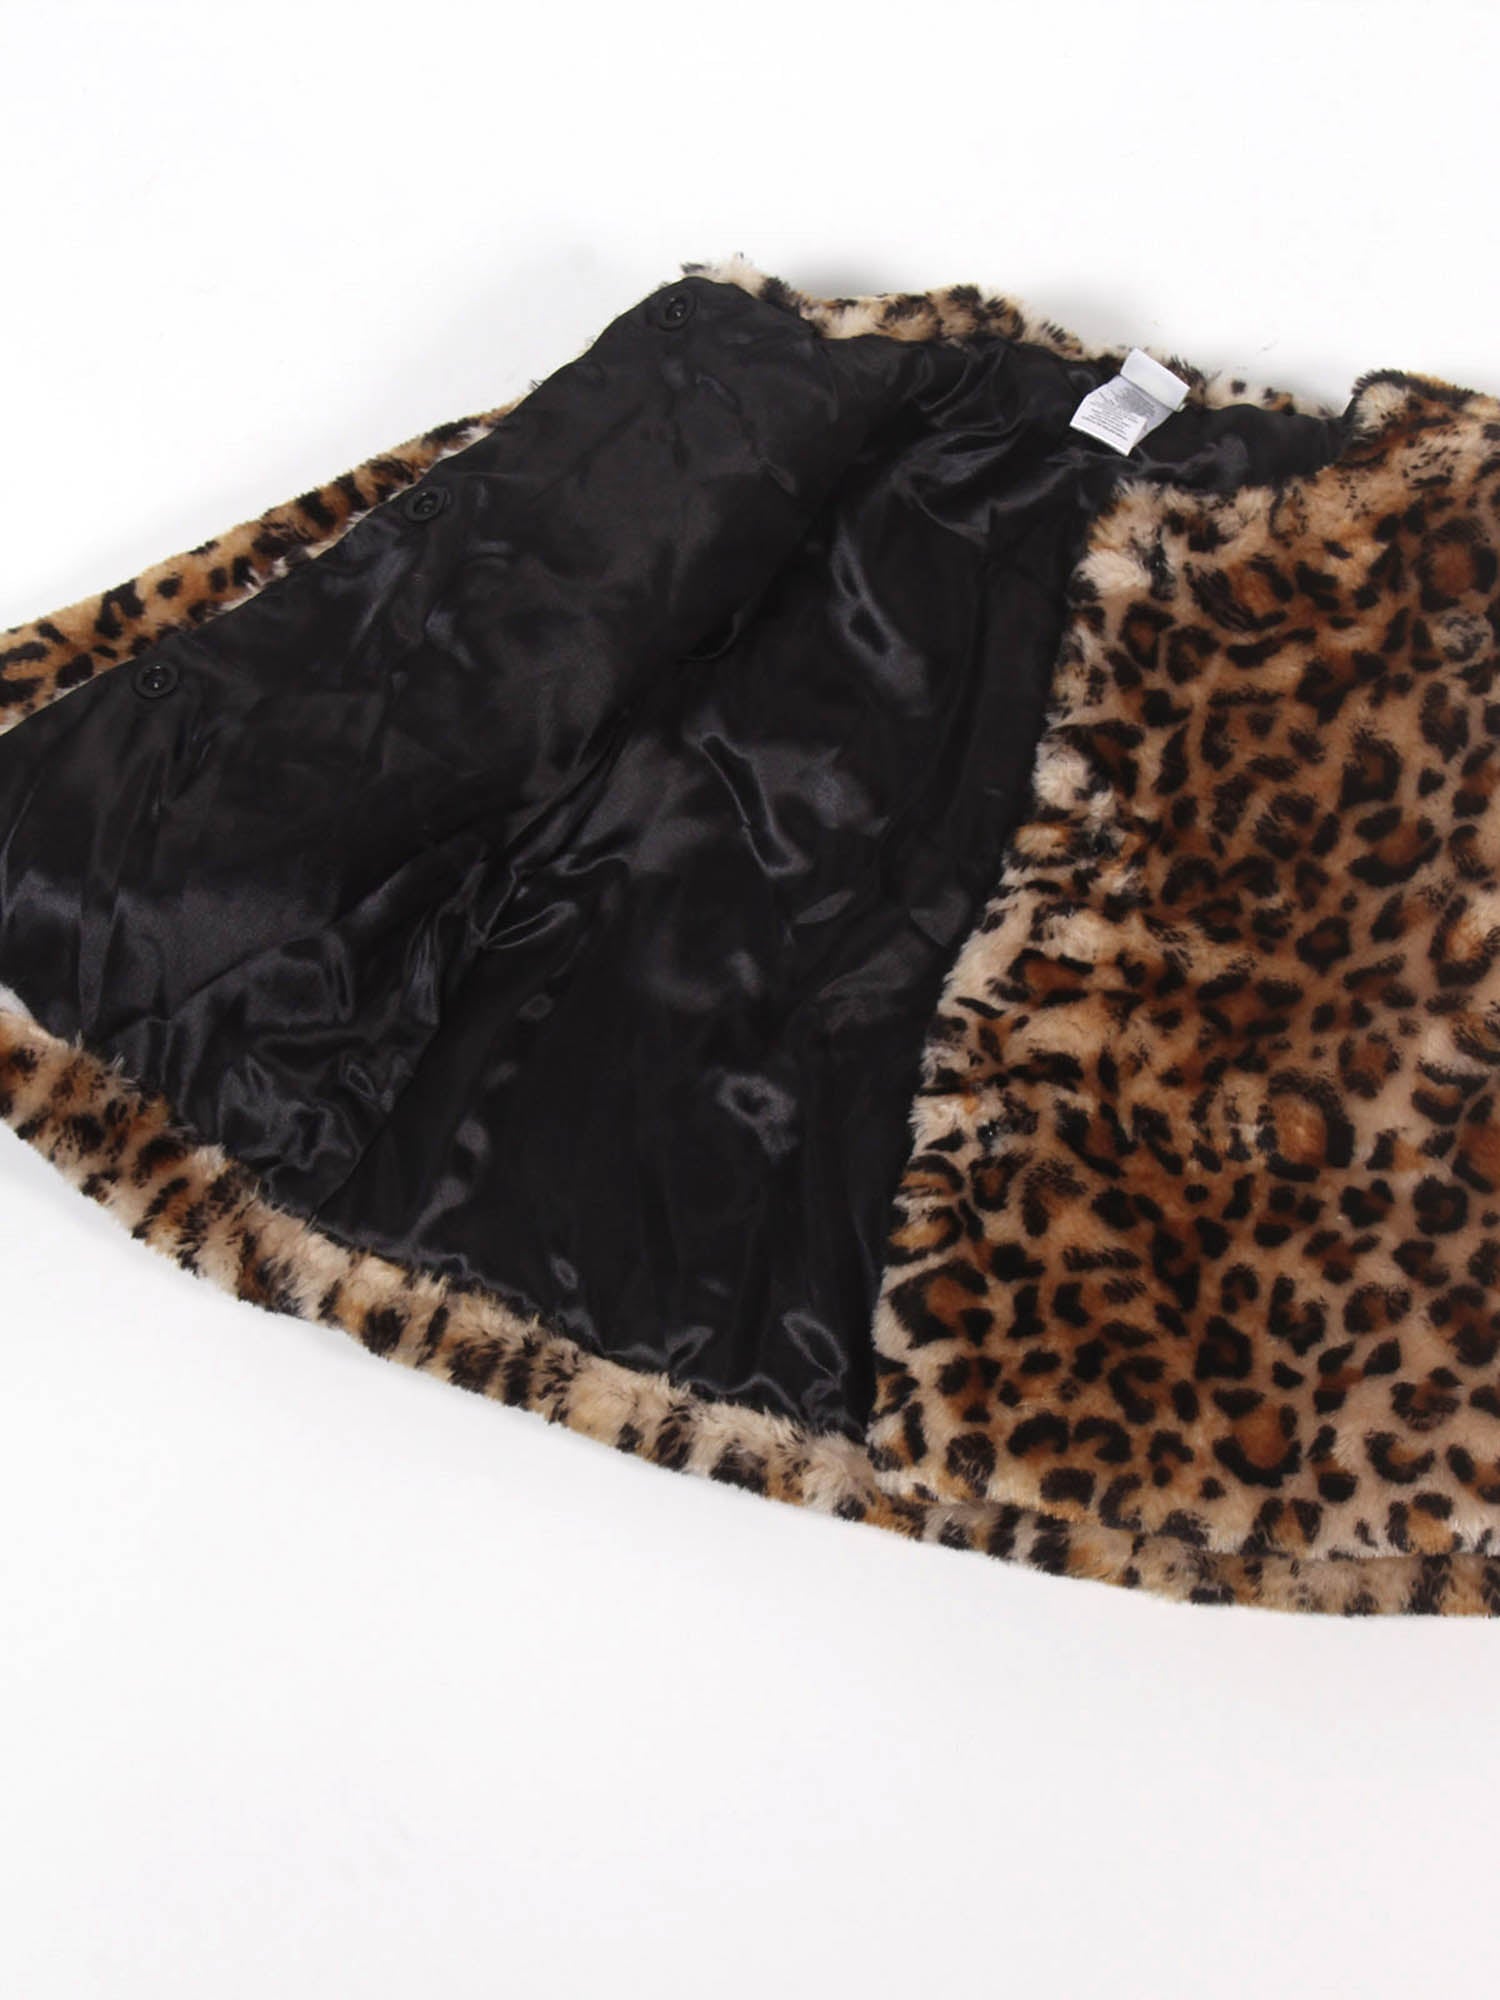 Cheeta Print Fleece Jackets